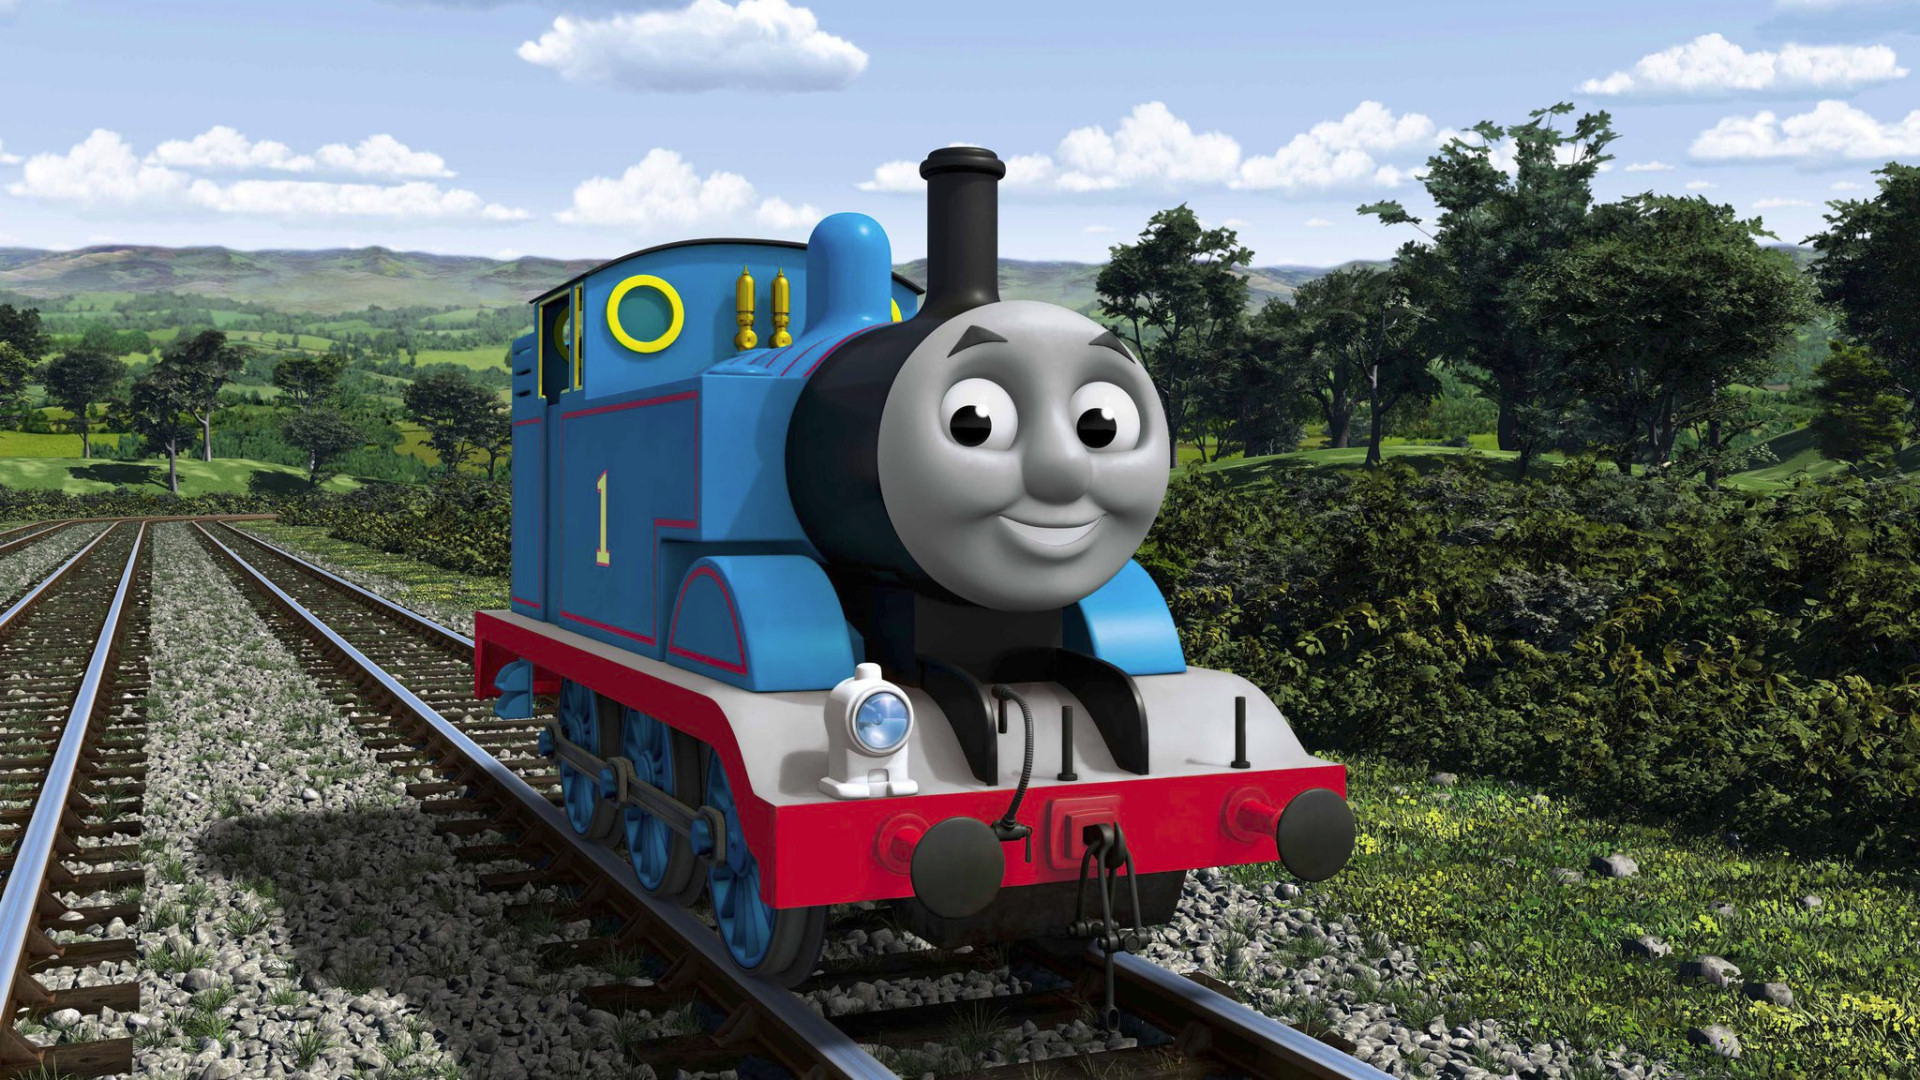 Thomas The Tank Engine & Friends episodes (TV Series 1984 - Now)